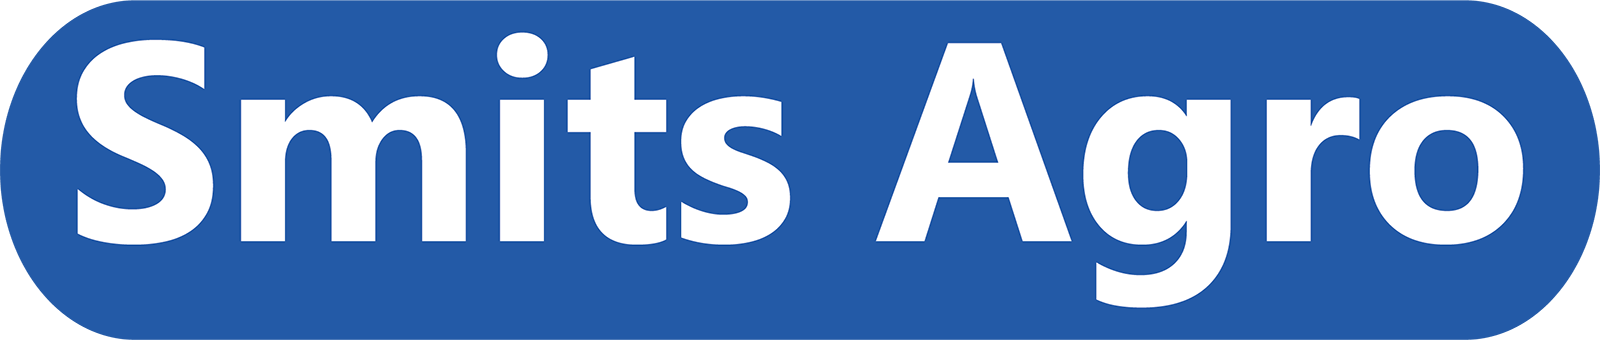 Smits Agro logo